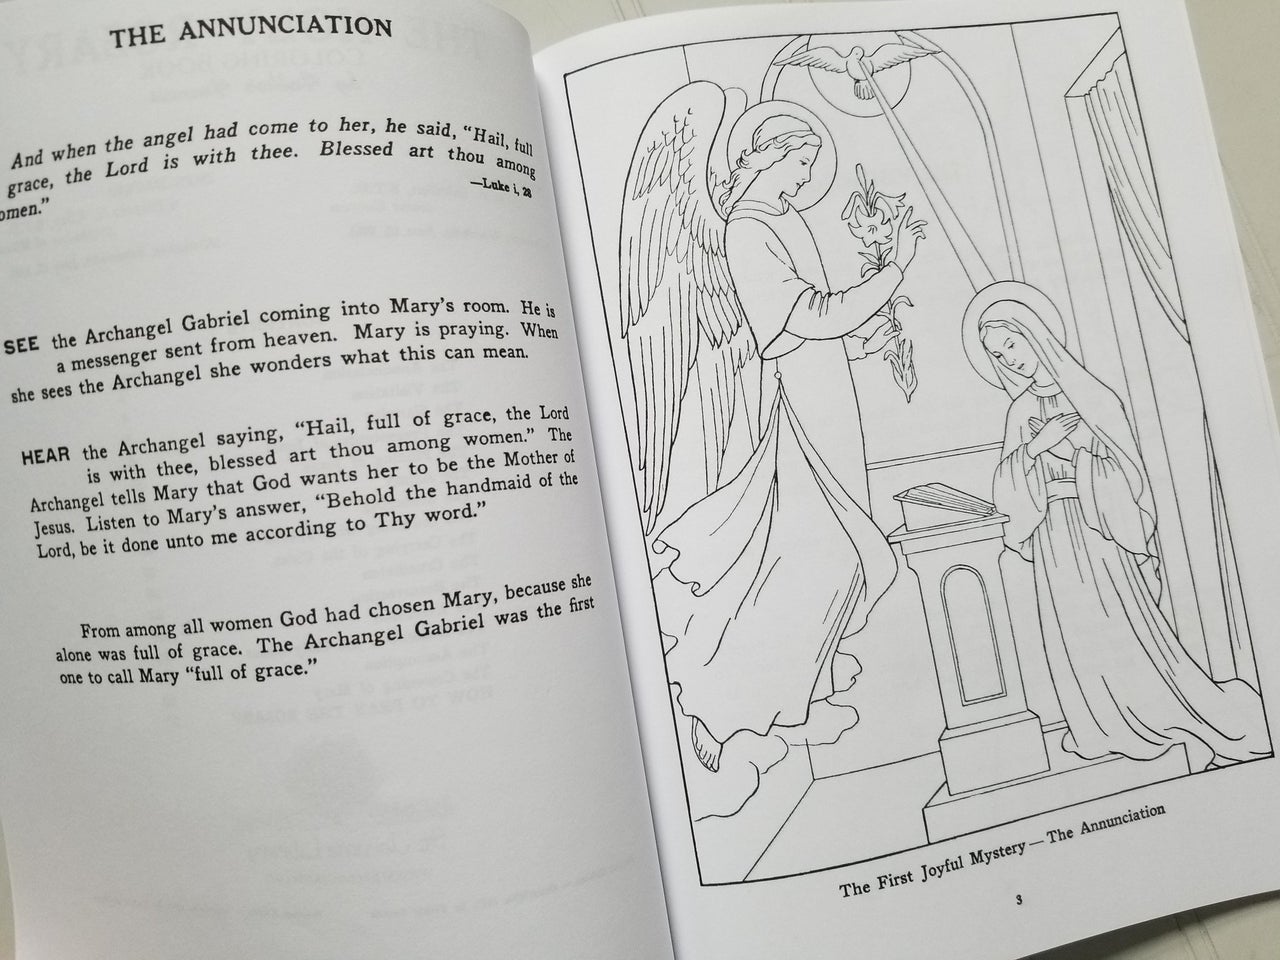 Catholic Saint Sketchbook - the Catholic Saint Coloring Book for